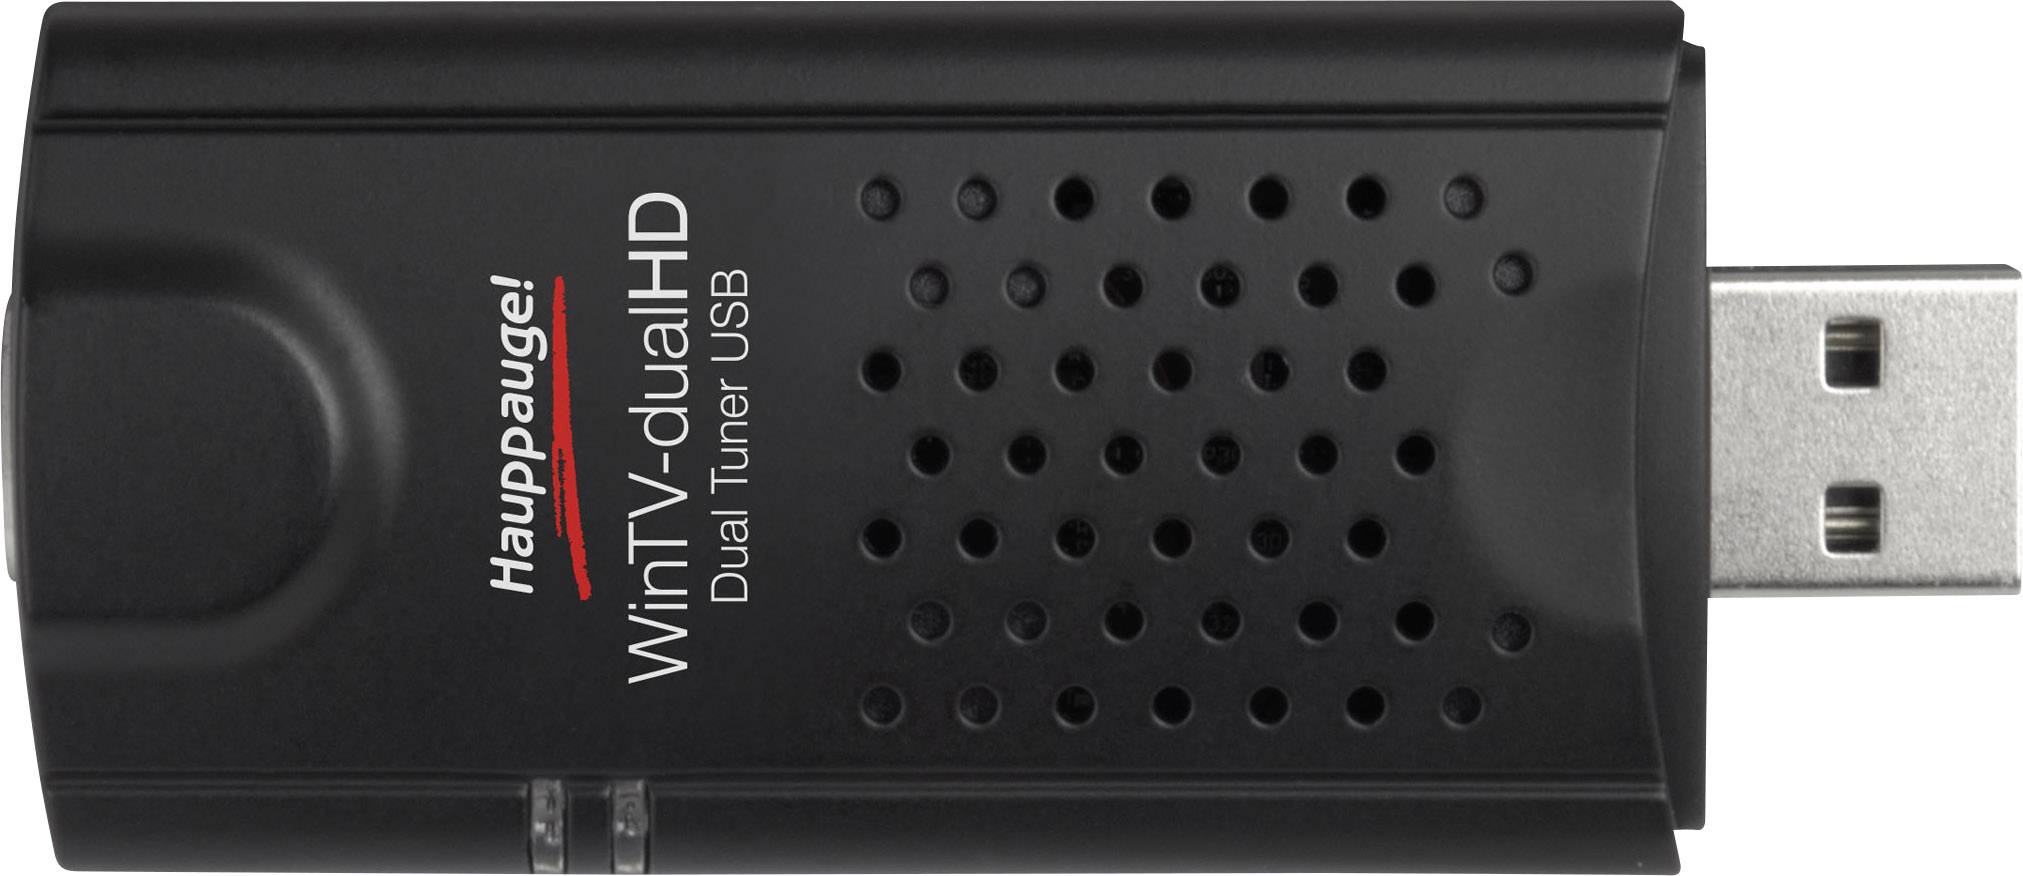 USB televizní DVB-C, DVB-T2 a DVB-T tuner Hauppauge WinTV-dualHD s dálkovým ovládáním